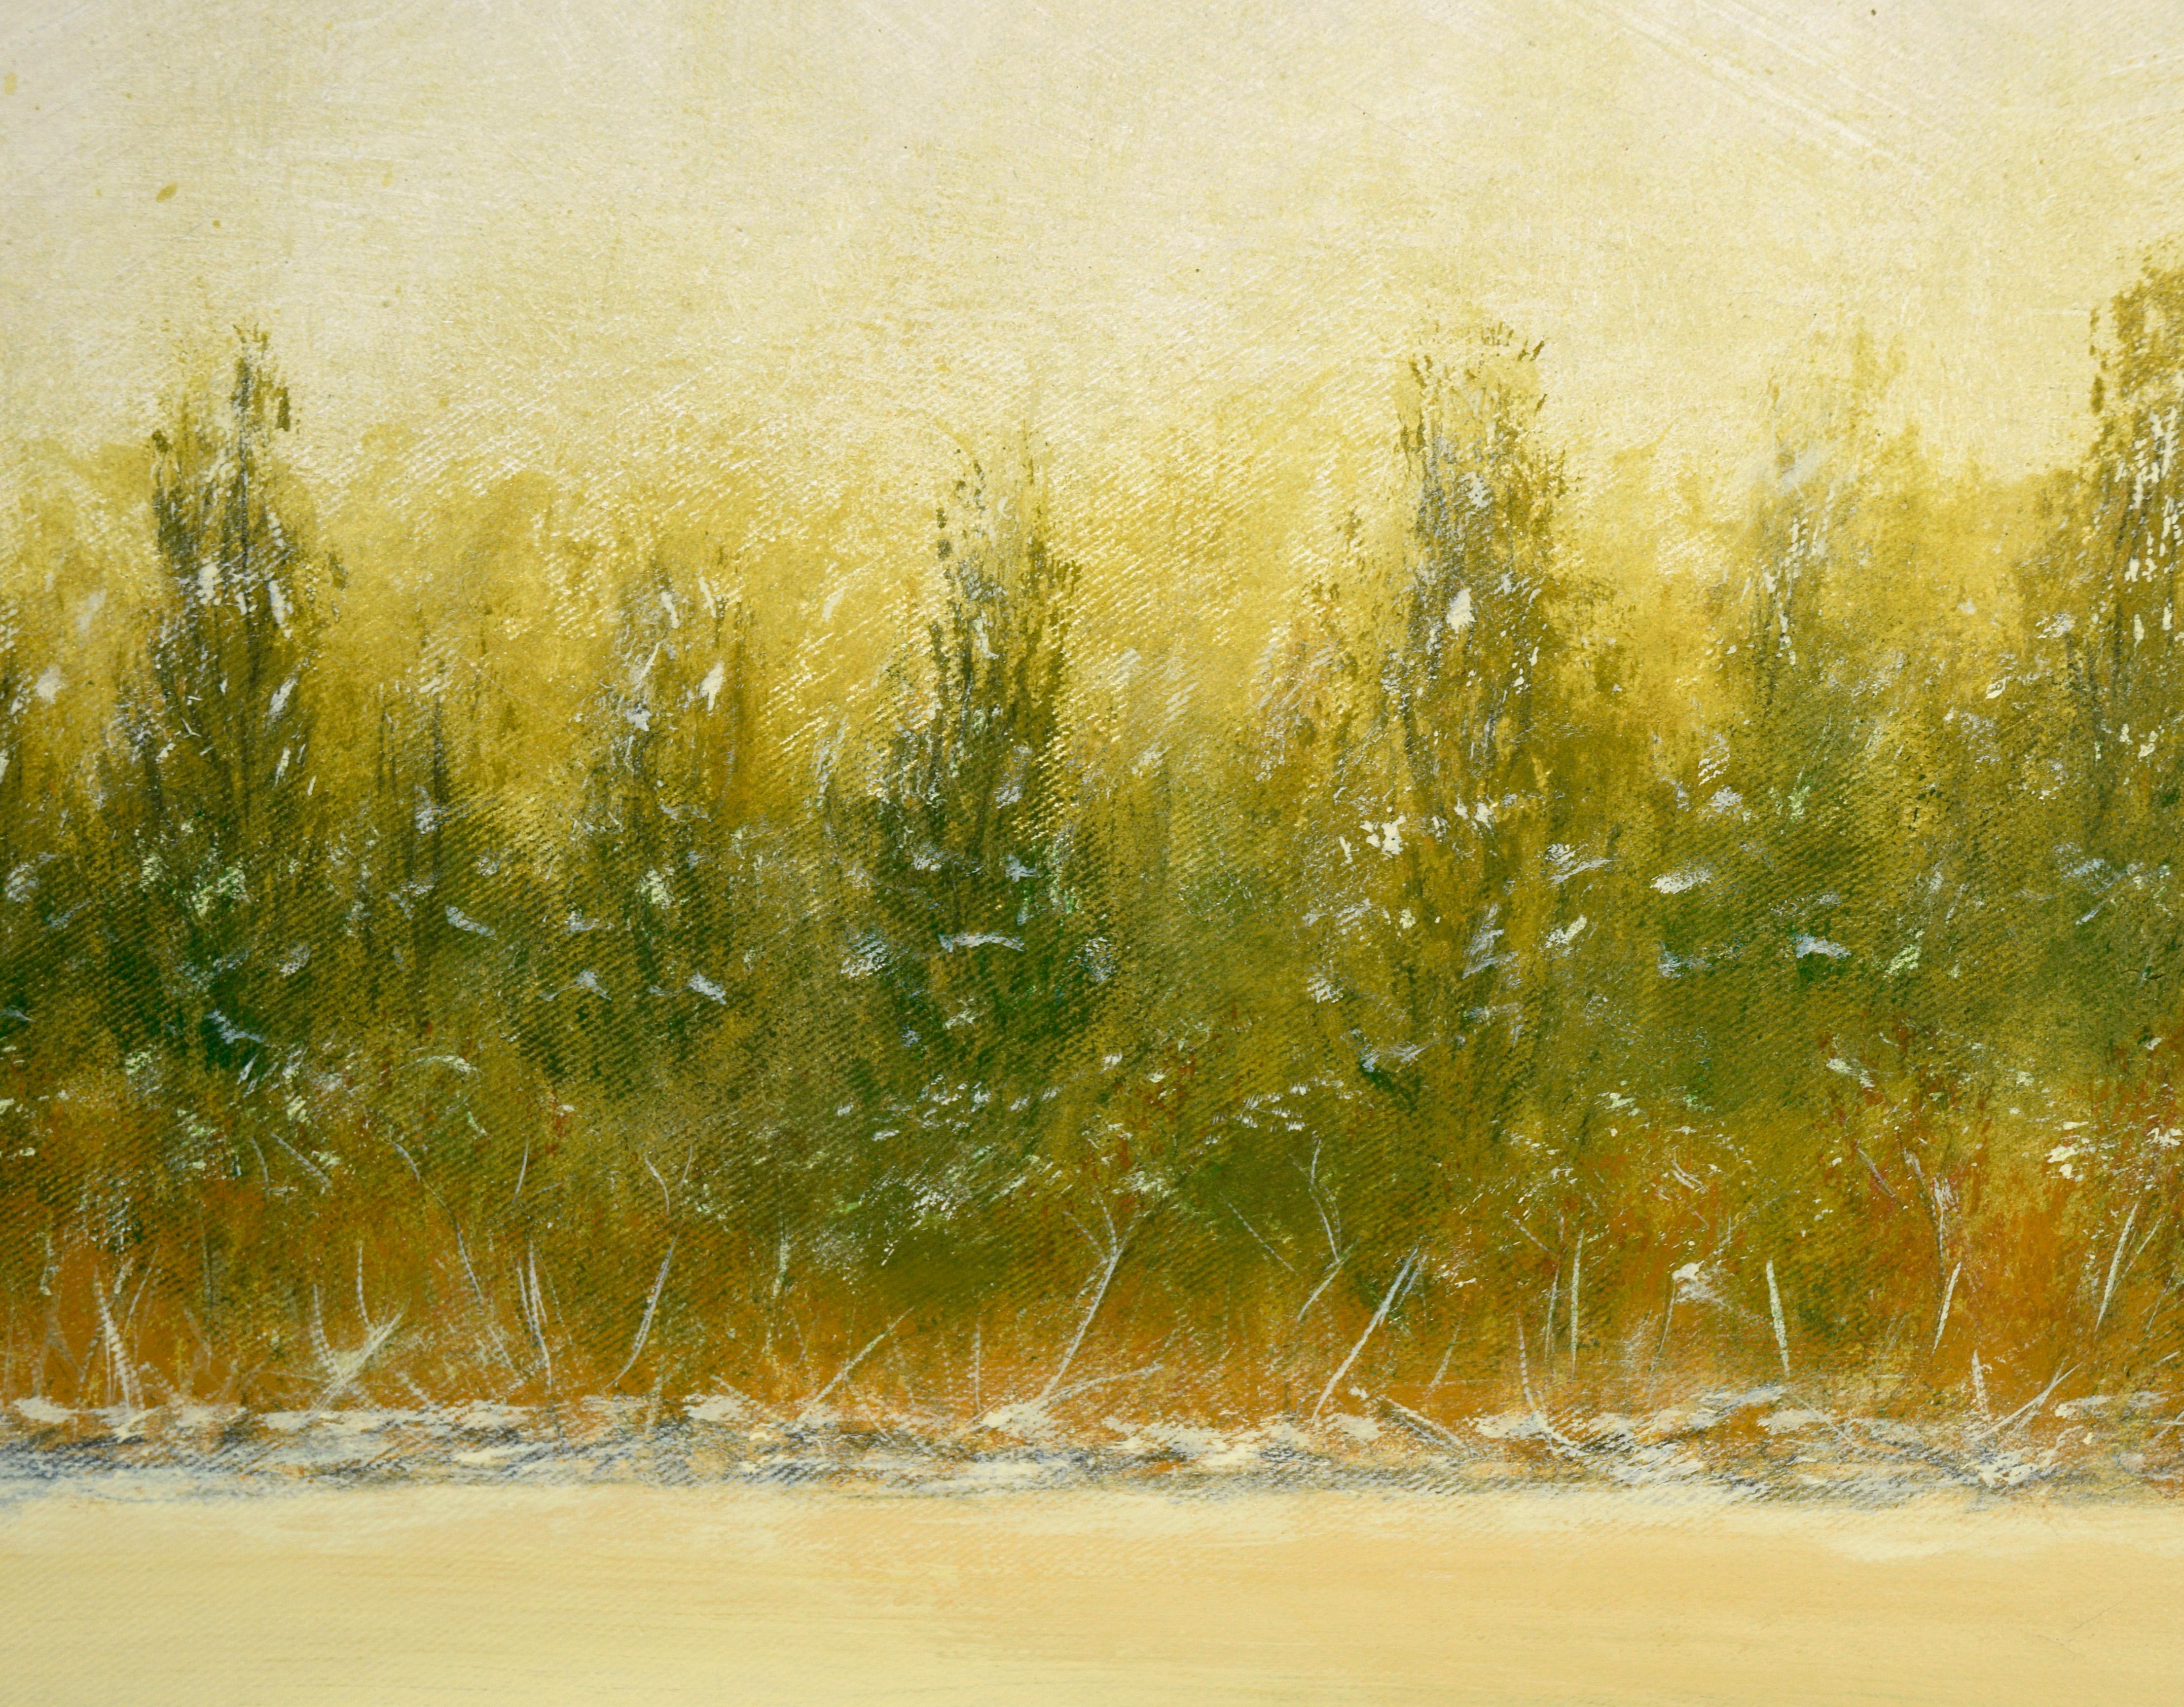 Across the Frozen Pond - Winter Landscape in Oil on Canvas - Orange Landscape Painting by Karen Evans